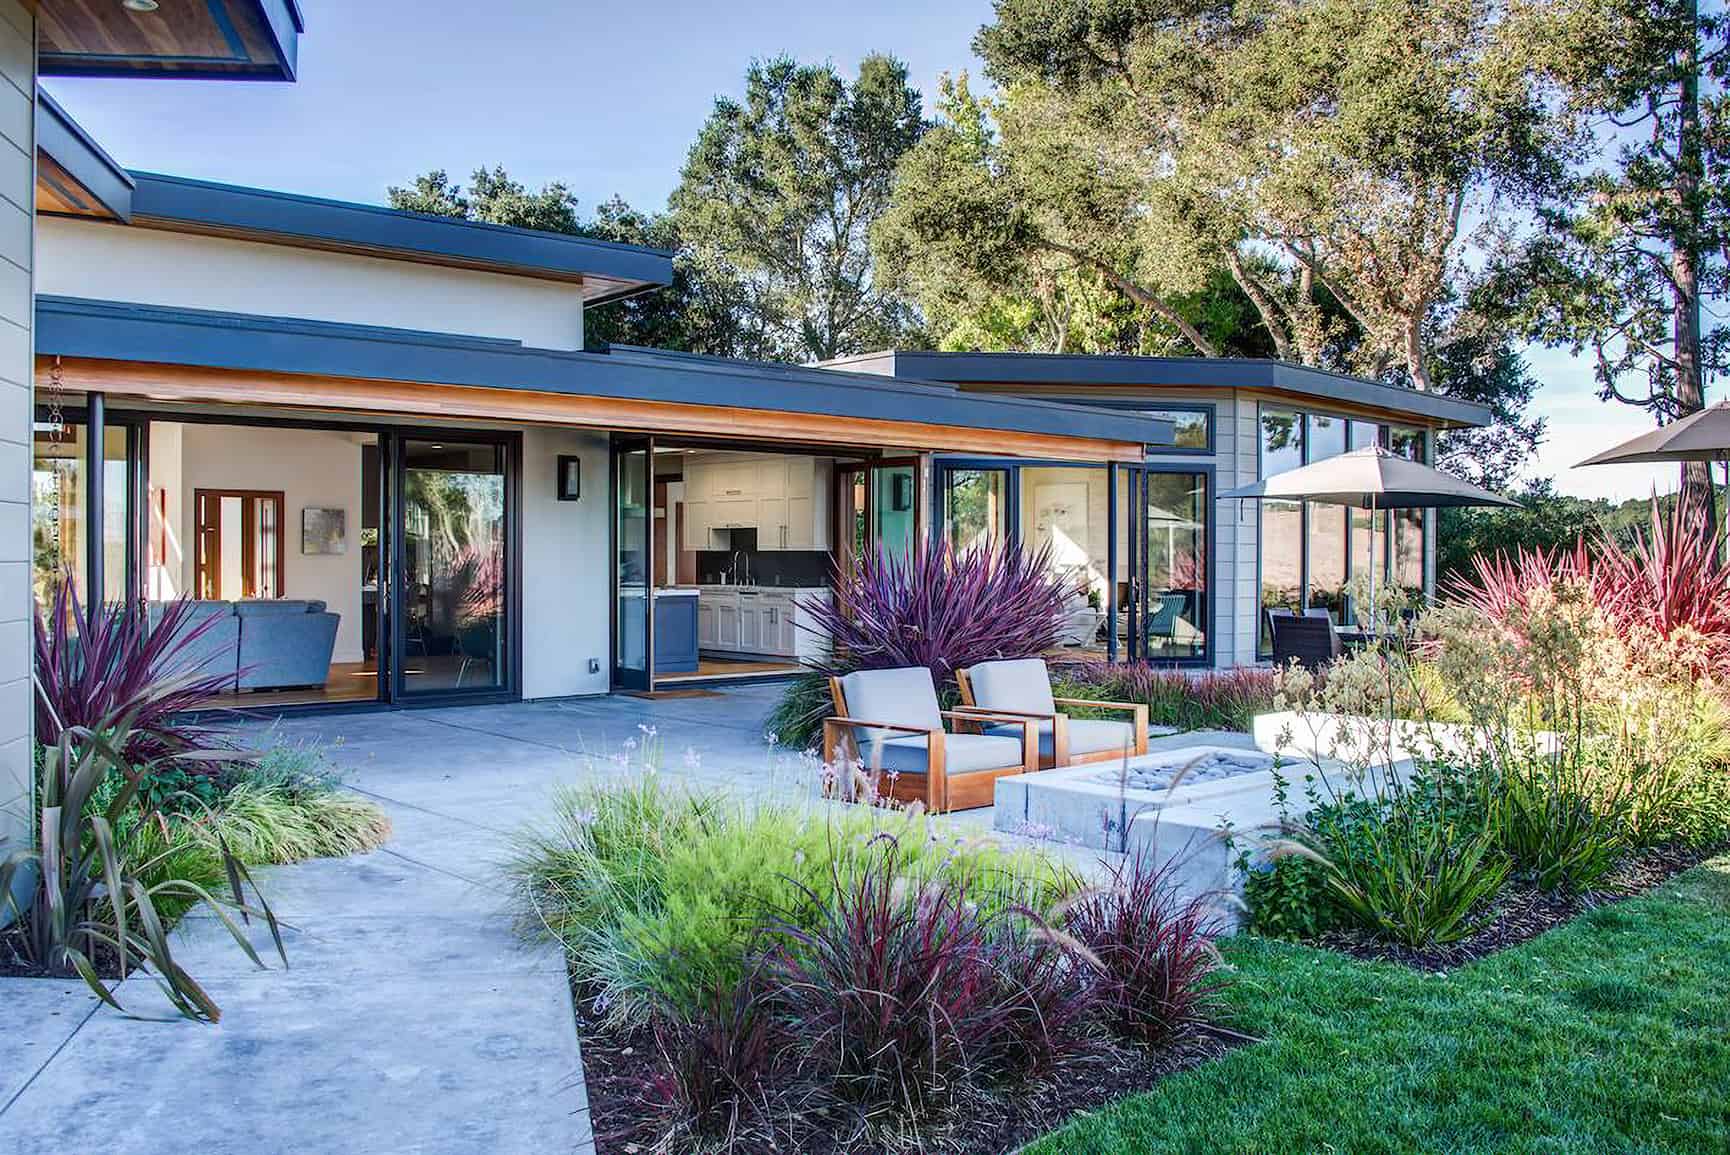 Beautiful California landscaping surrounds modern home.